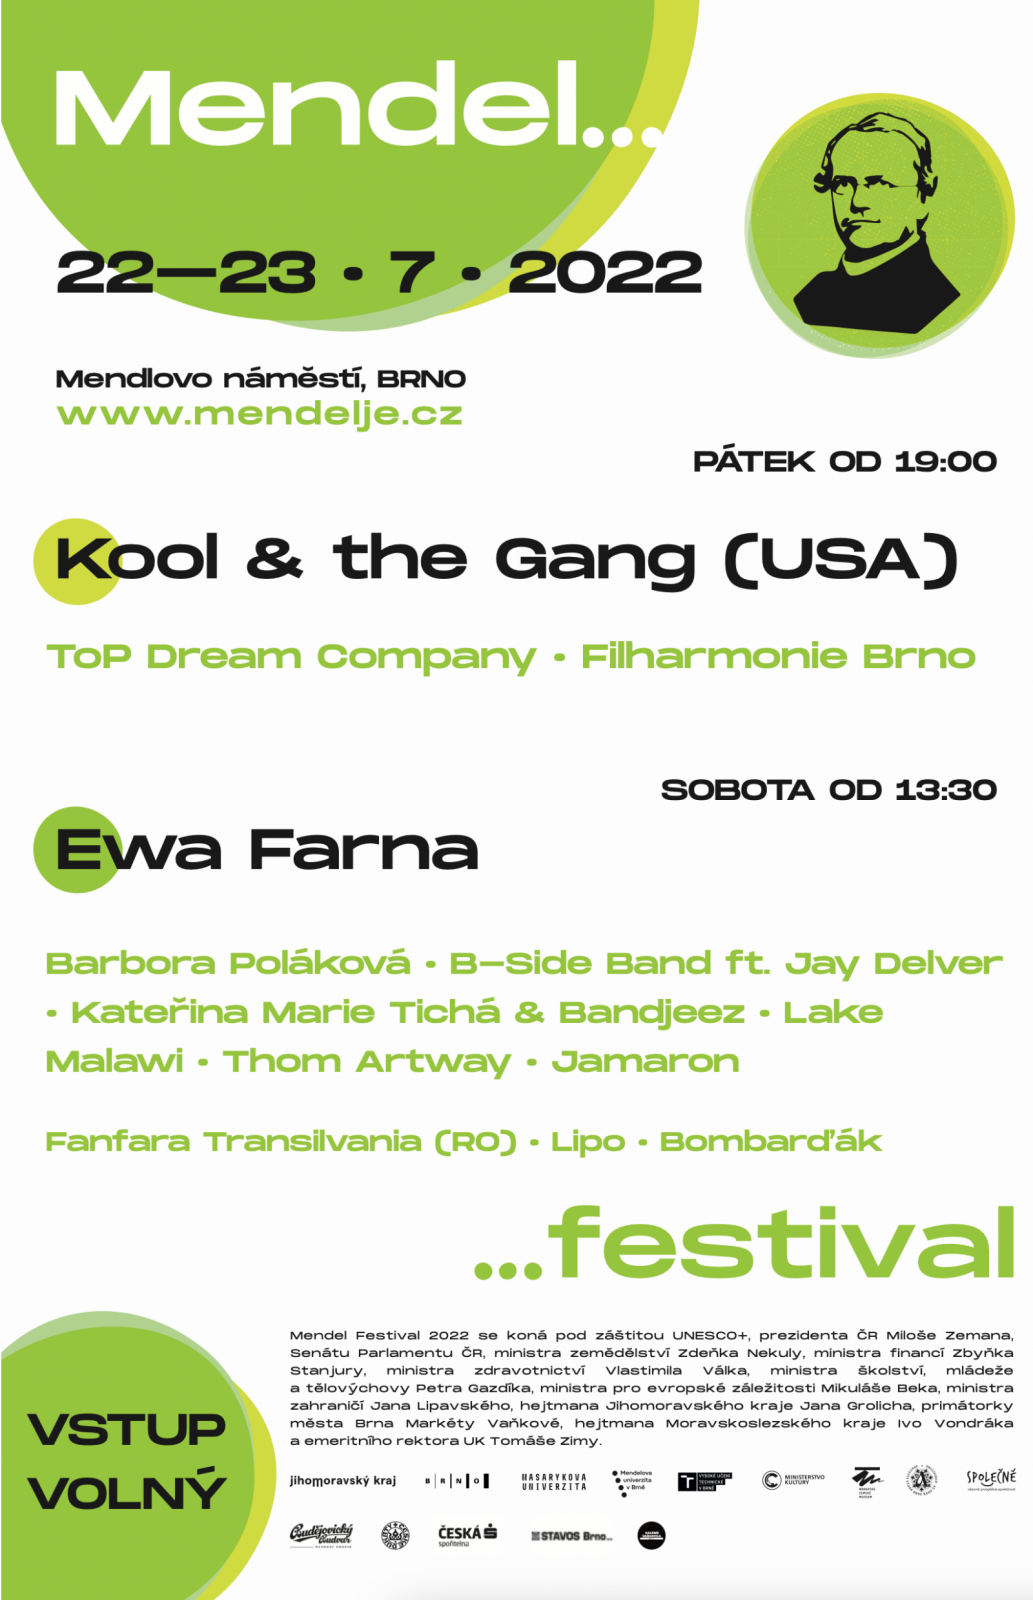 Mendel festival (Kool & the Gang, Ewa Farna)